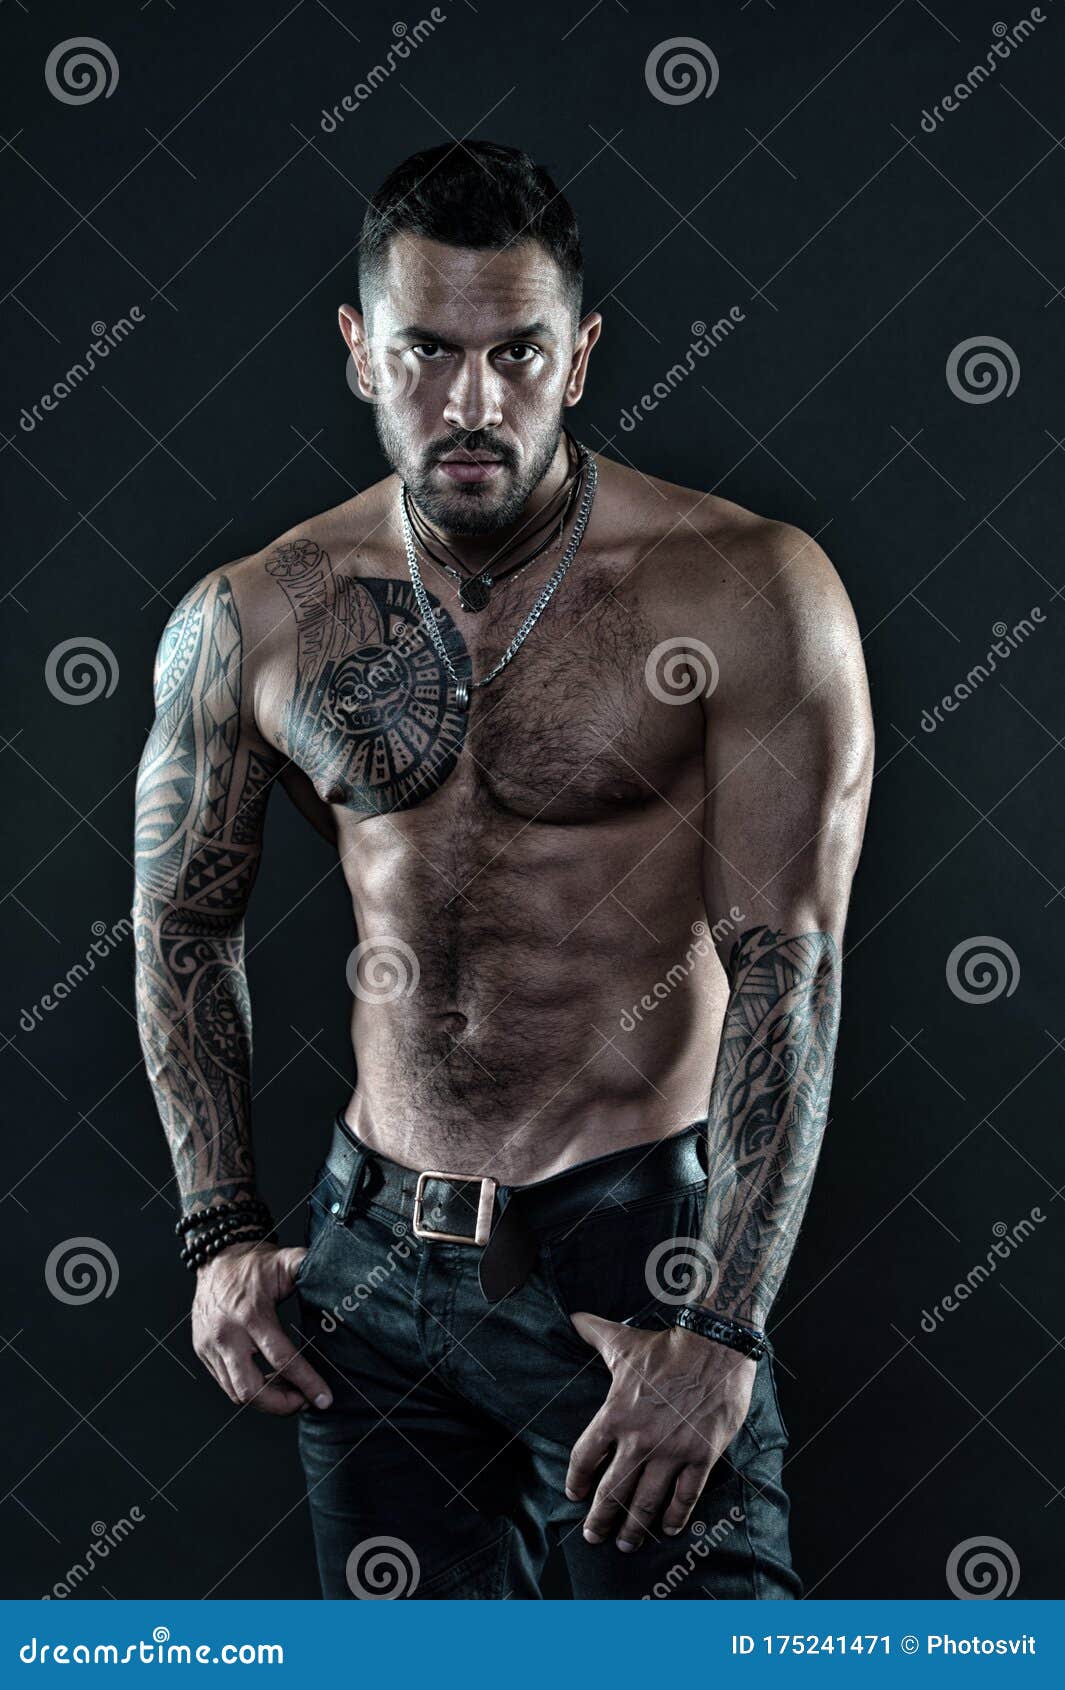 SPORTS  bodybuilder weightlifter fitness muscle tattoo wallpaper   1920x1280  592224  WallpaperUP